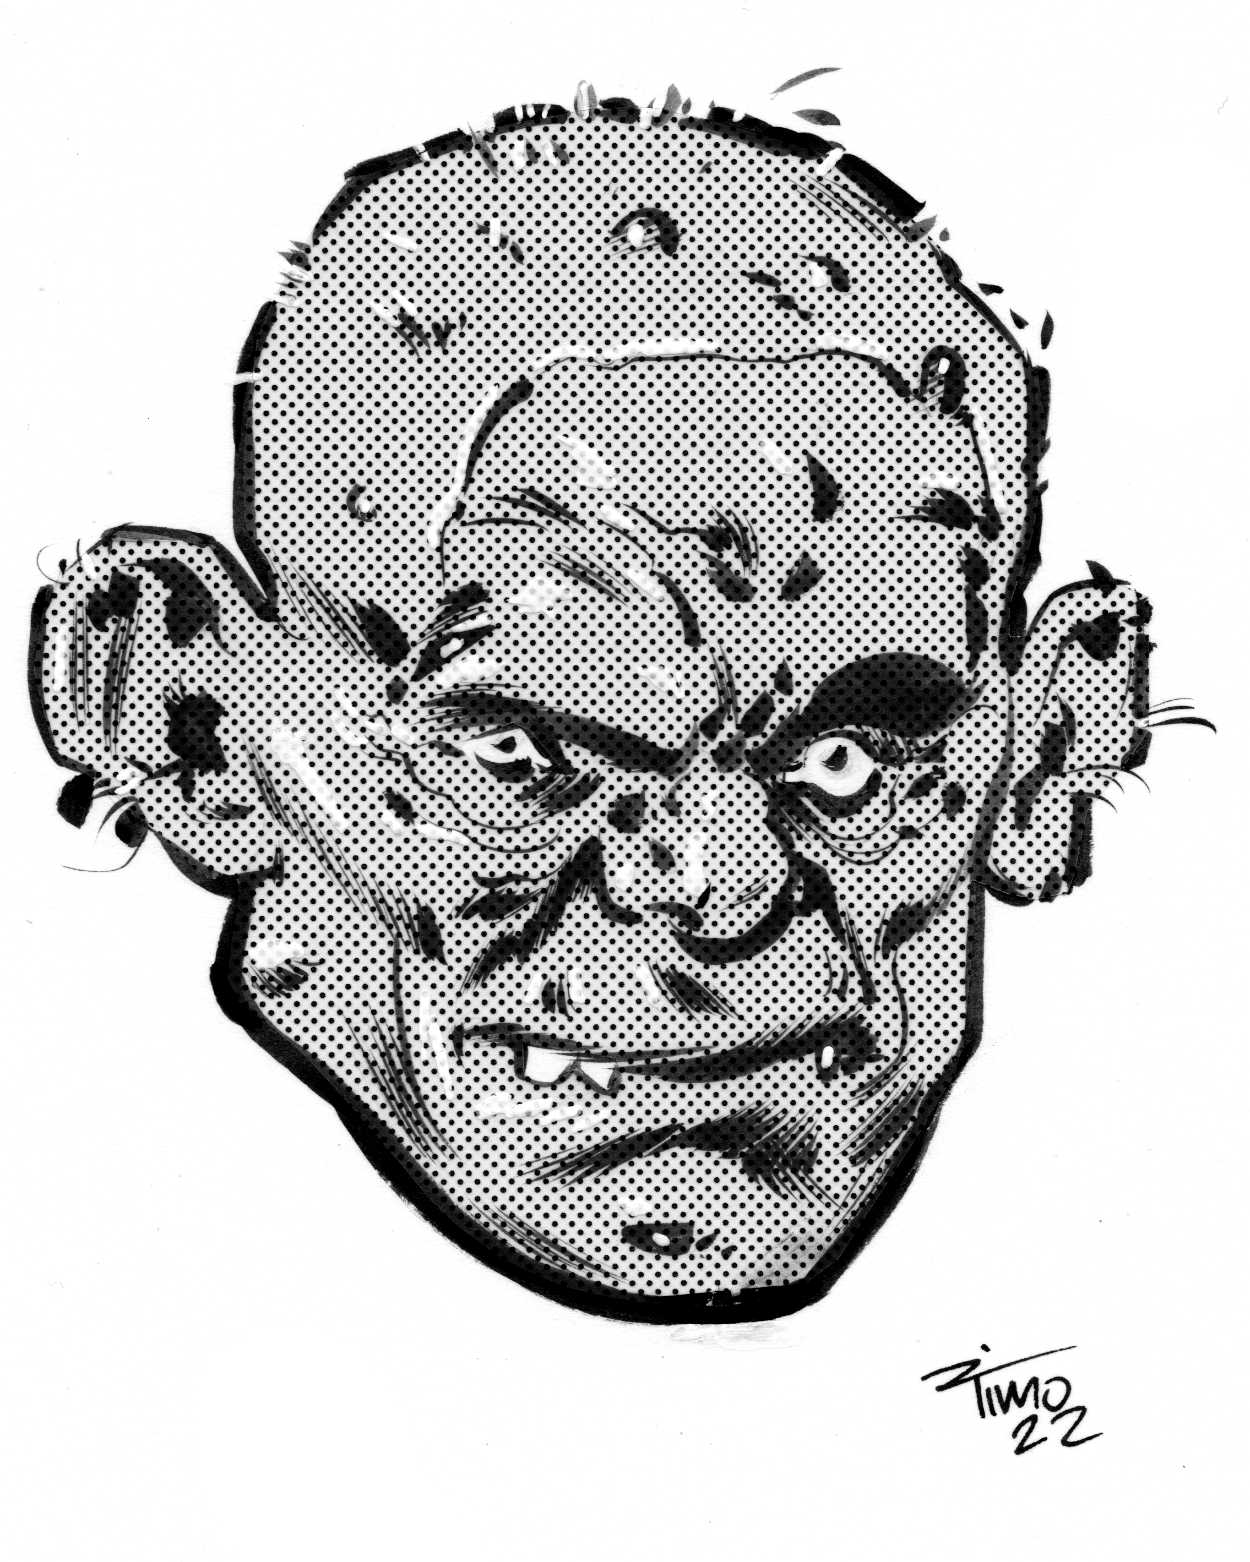 dismembered creepy floating head illustration inked with pentel brush pen screentone